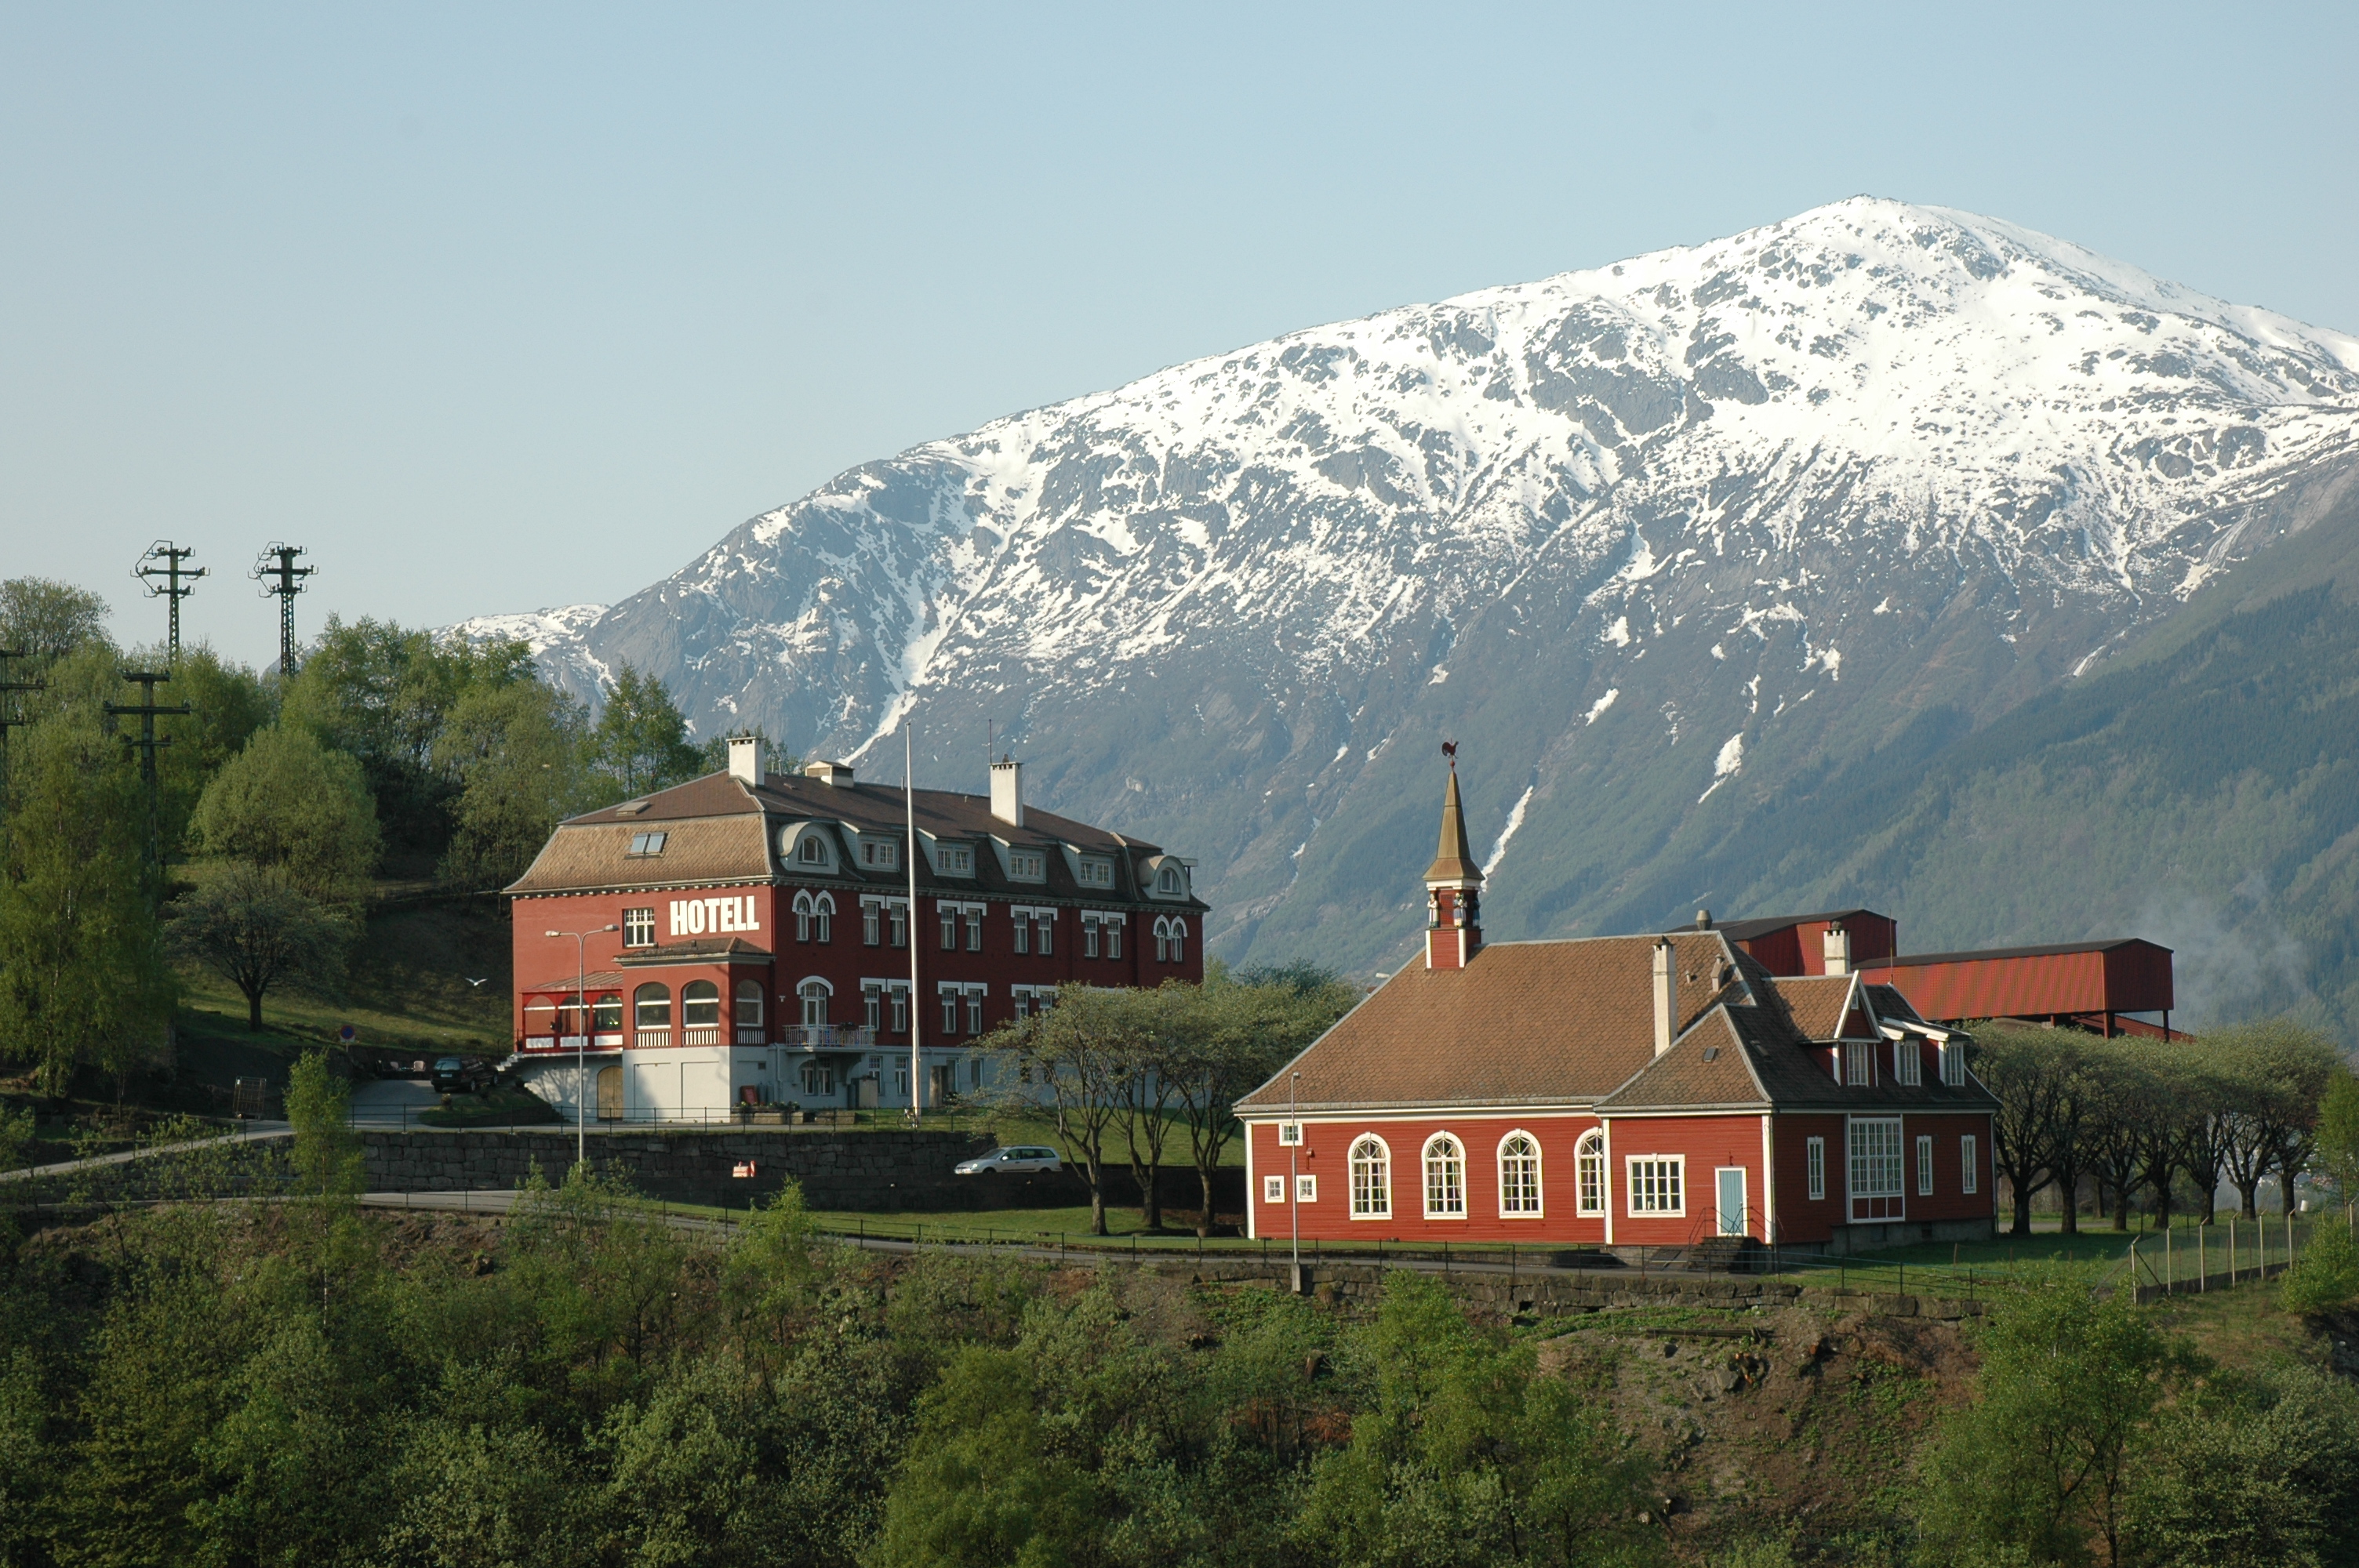 Tyssedal Hotel and the banquet hall Festiviteten.  © RHF (Destination Hardanger Fjord) / Harald Hognerud